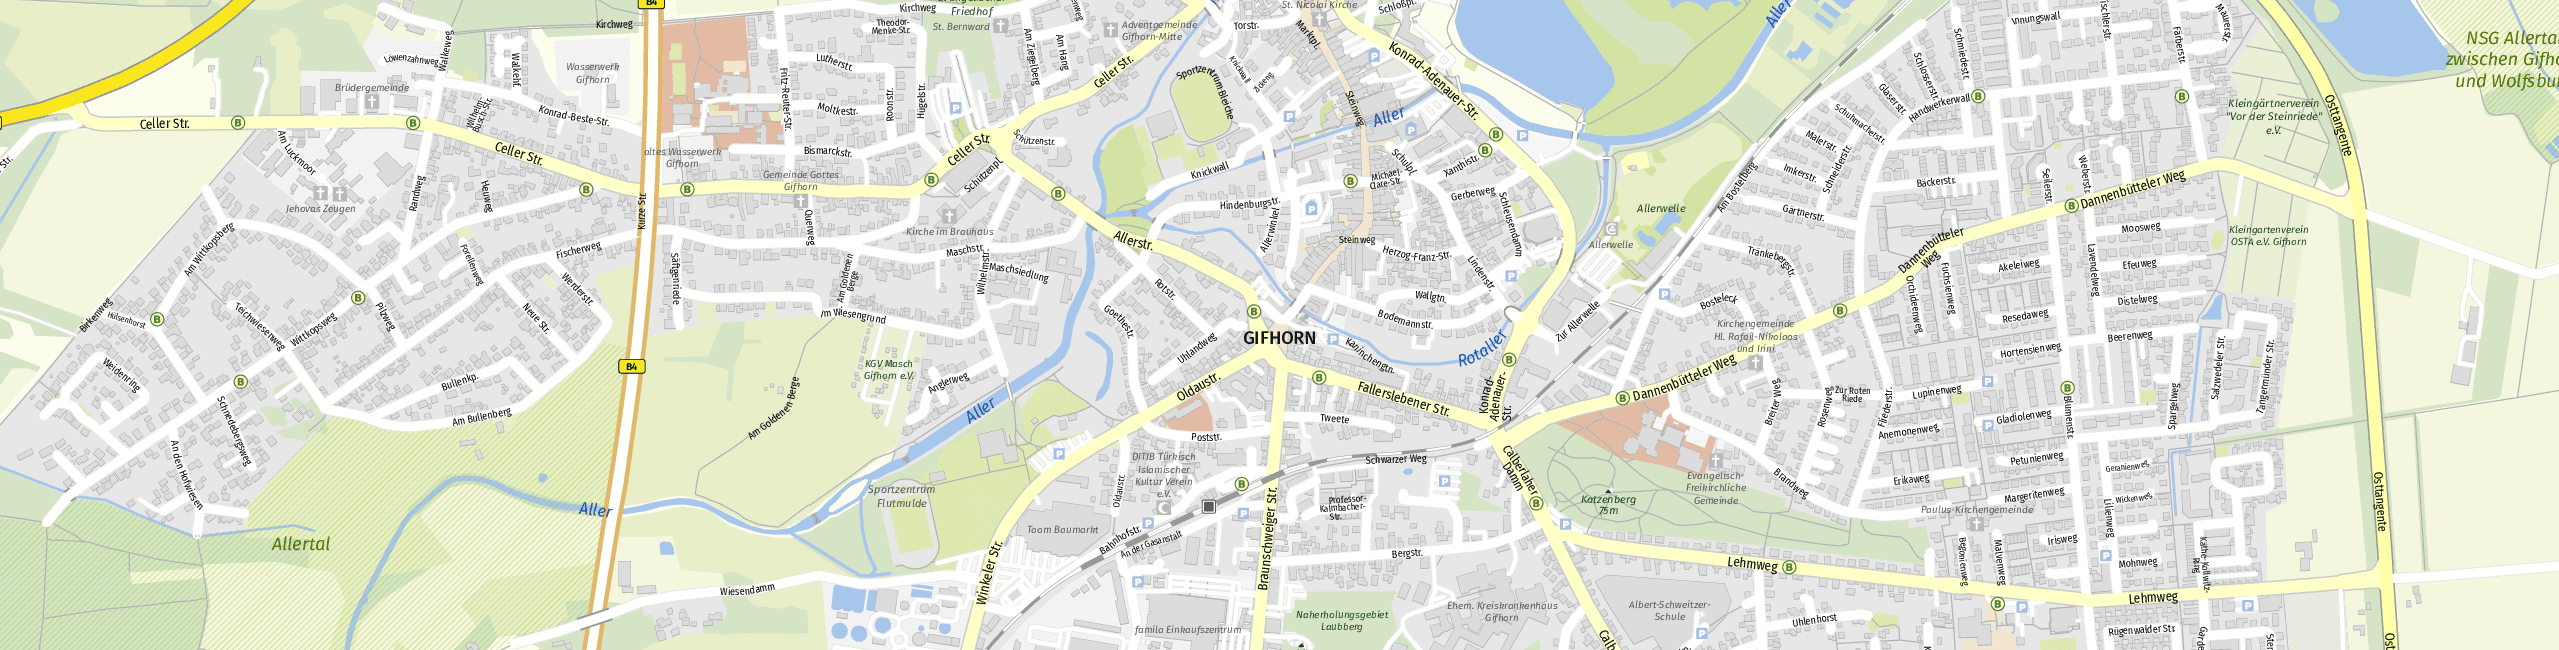 Stadtplan Gifhorn zum Downloaden.